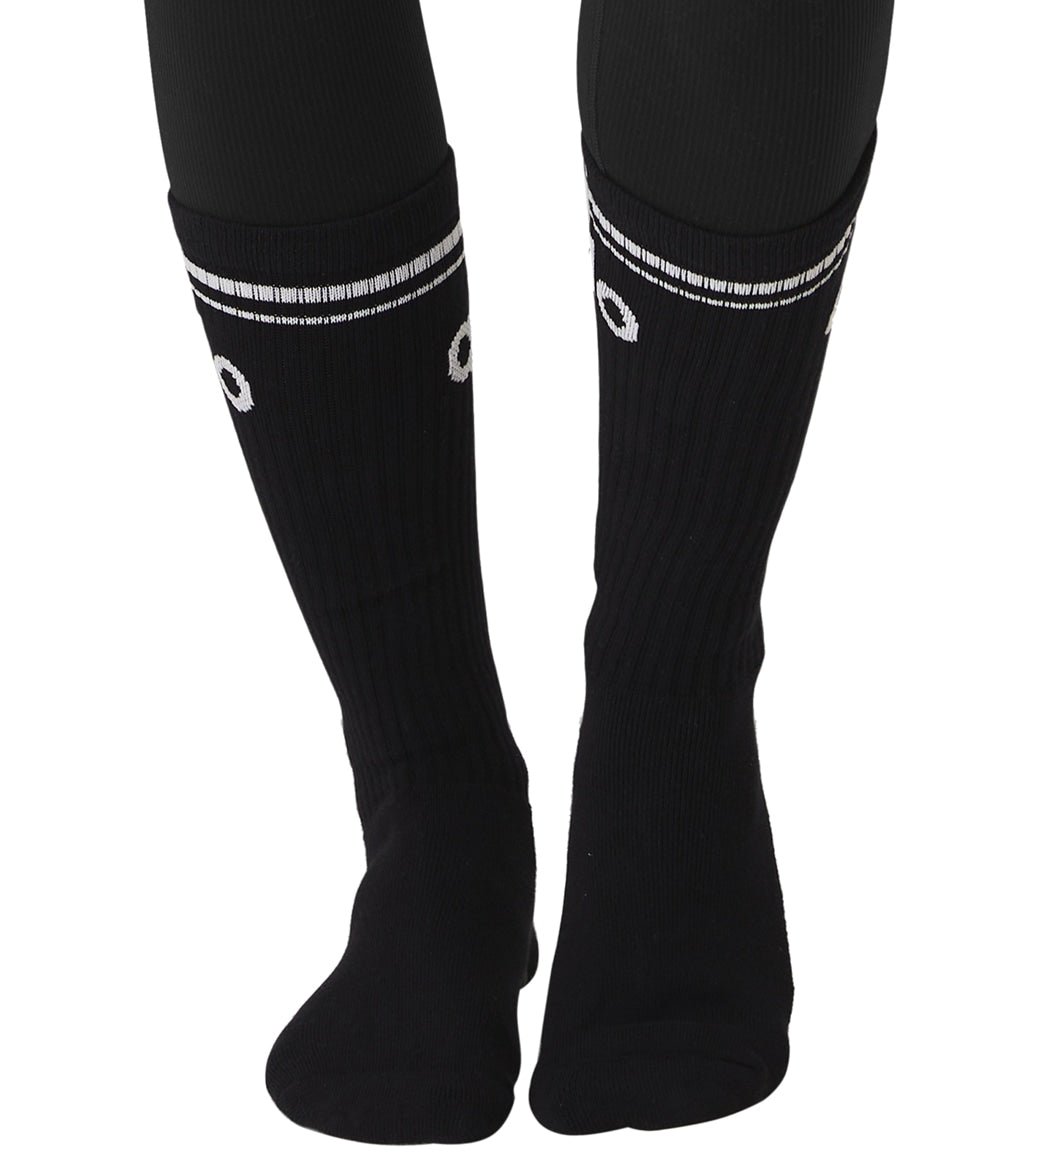 READY STOCK Alo Yoga Knee High Throwback socks! Available in black